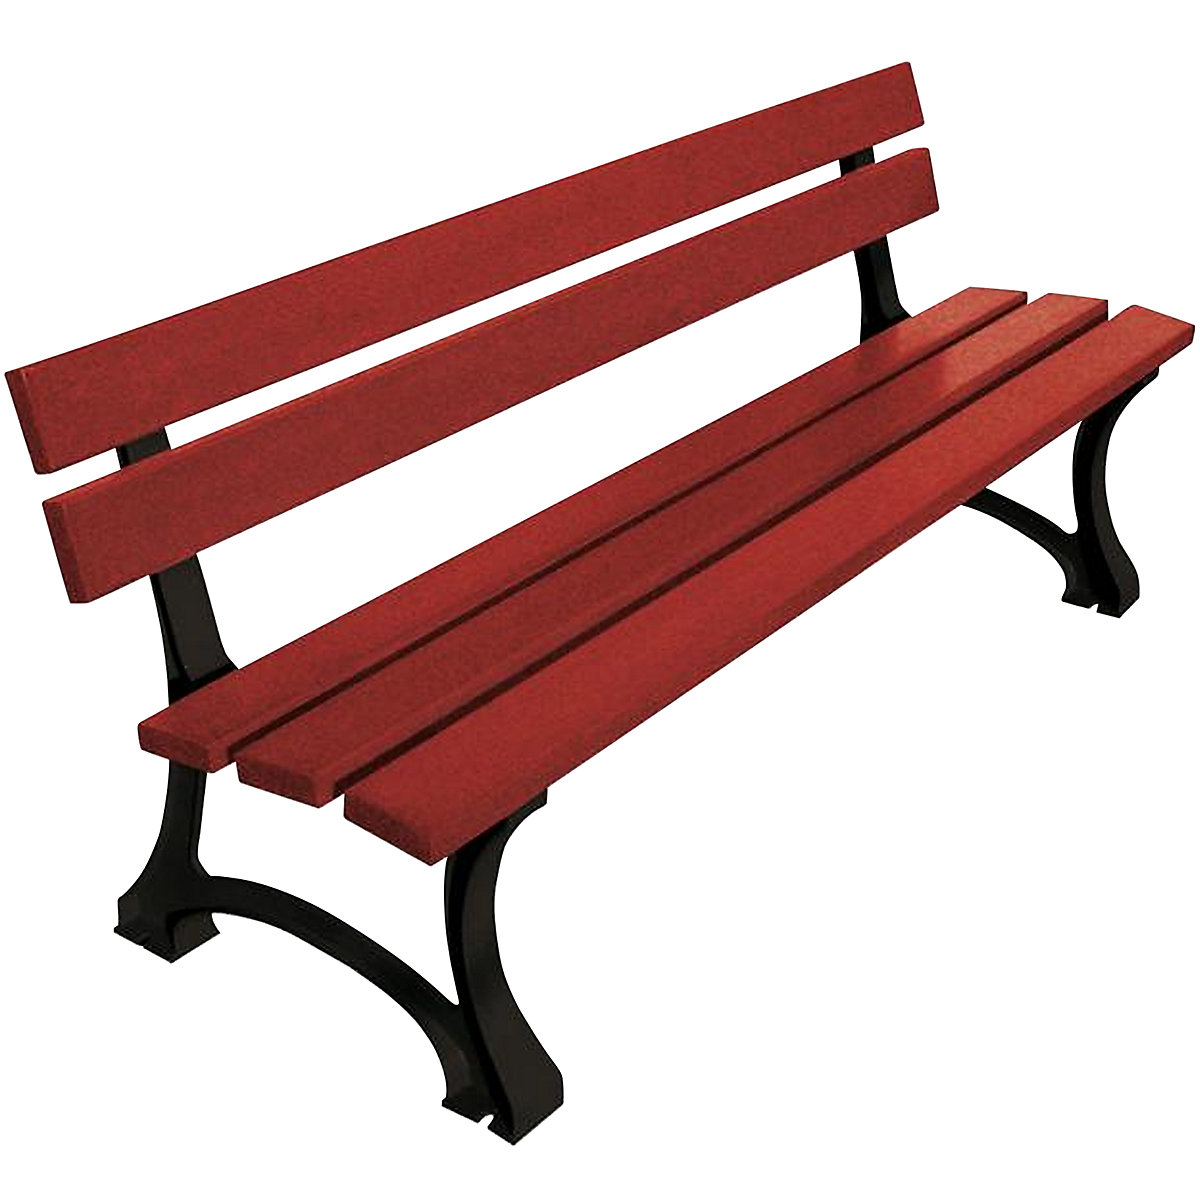 MORA park bench – PROCITY